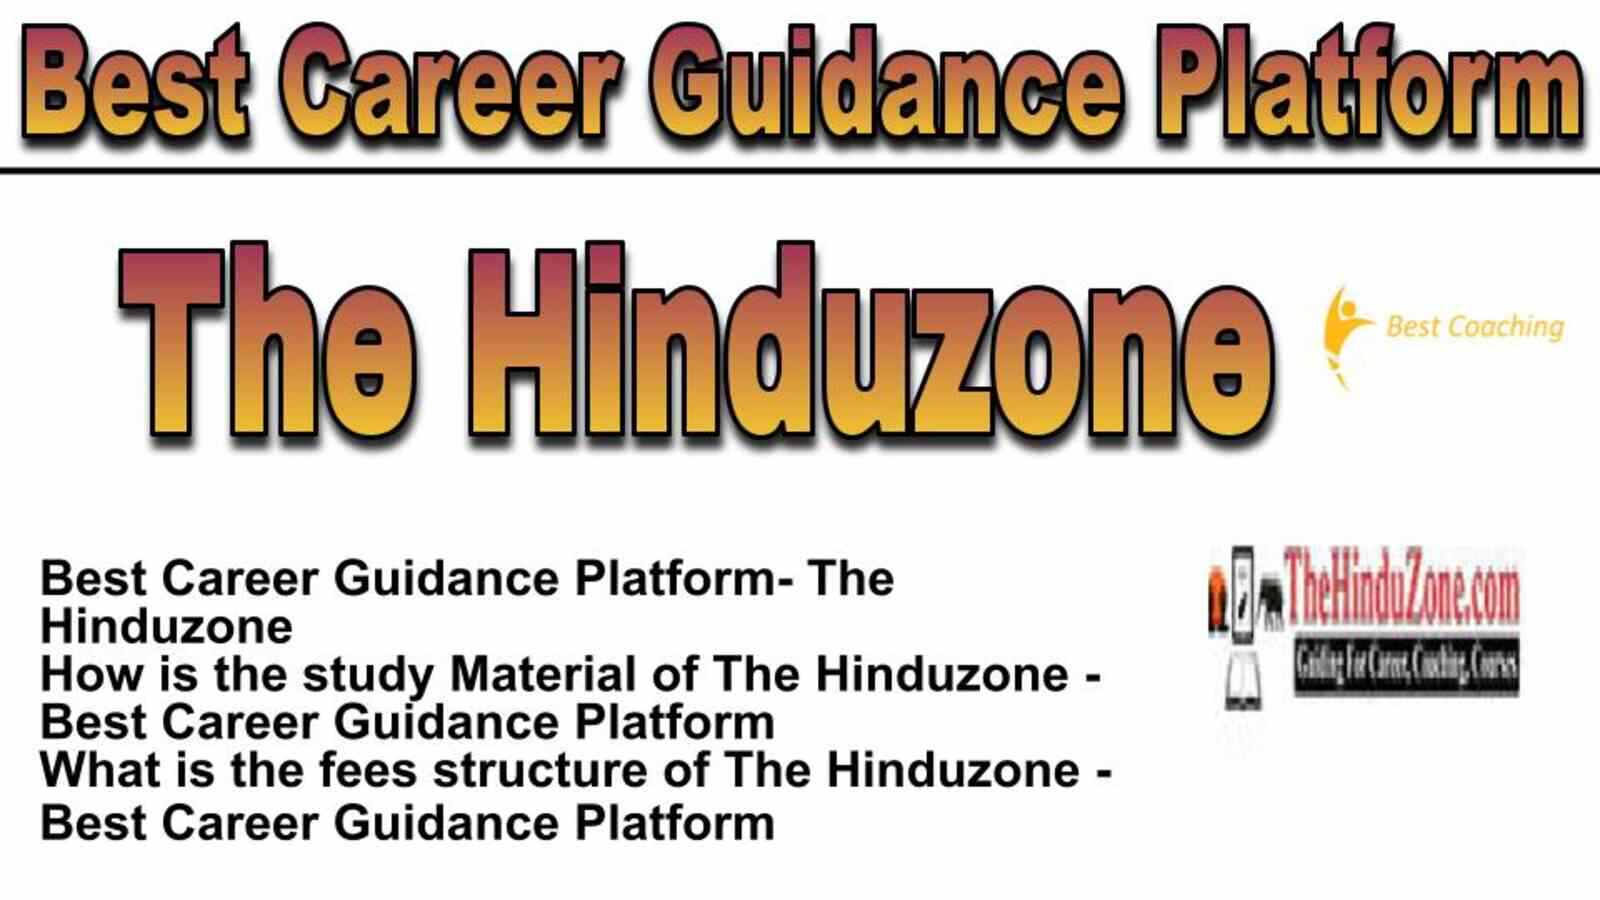 The Hinduzone Best Career Guidance Platform